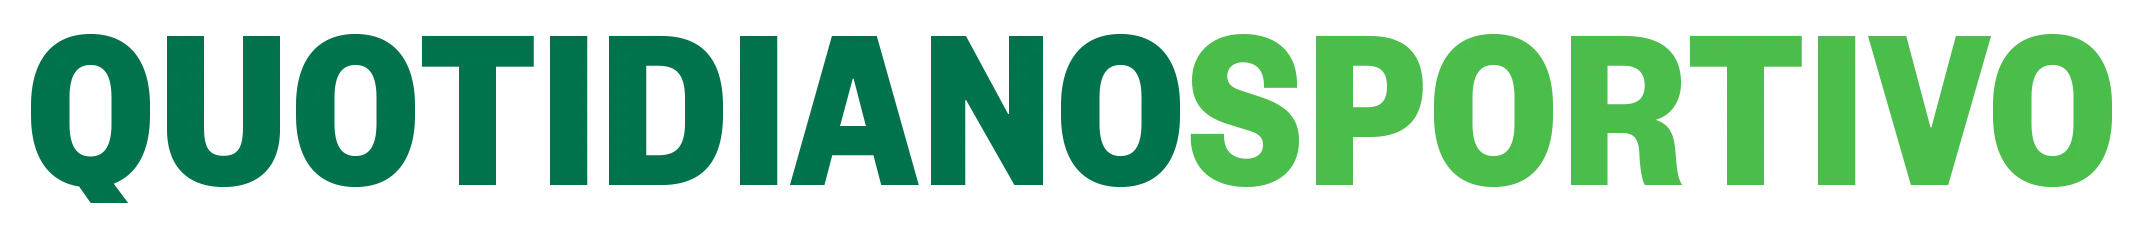 logo immagine